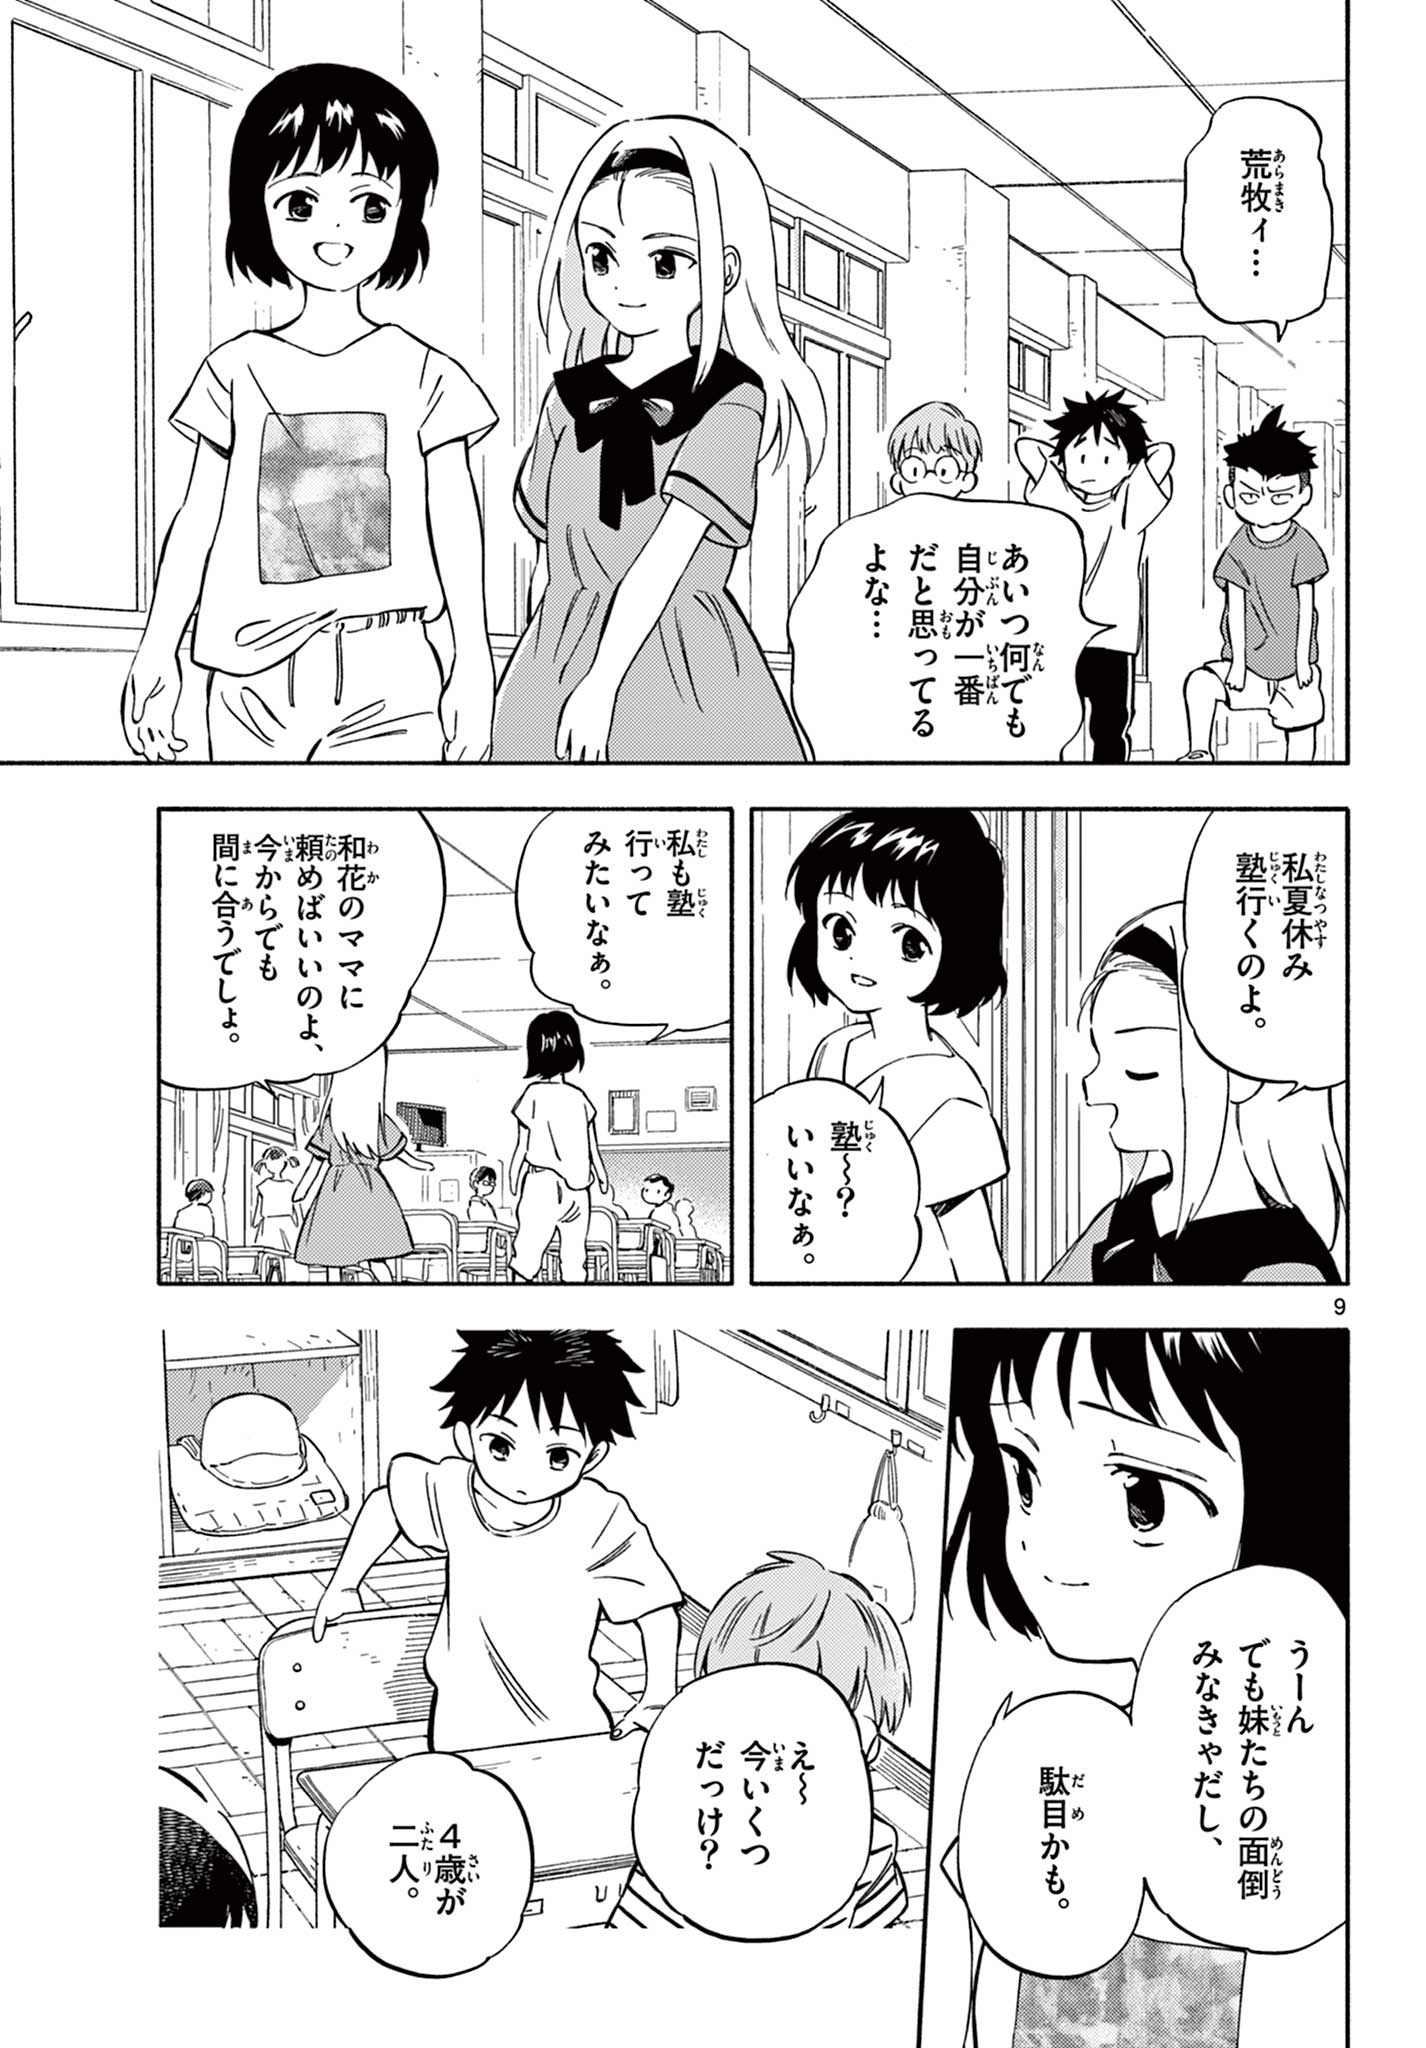 Nami no Shijima no Horizont - Chapter 8.1 - Page 9